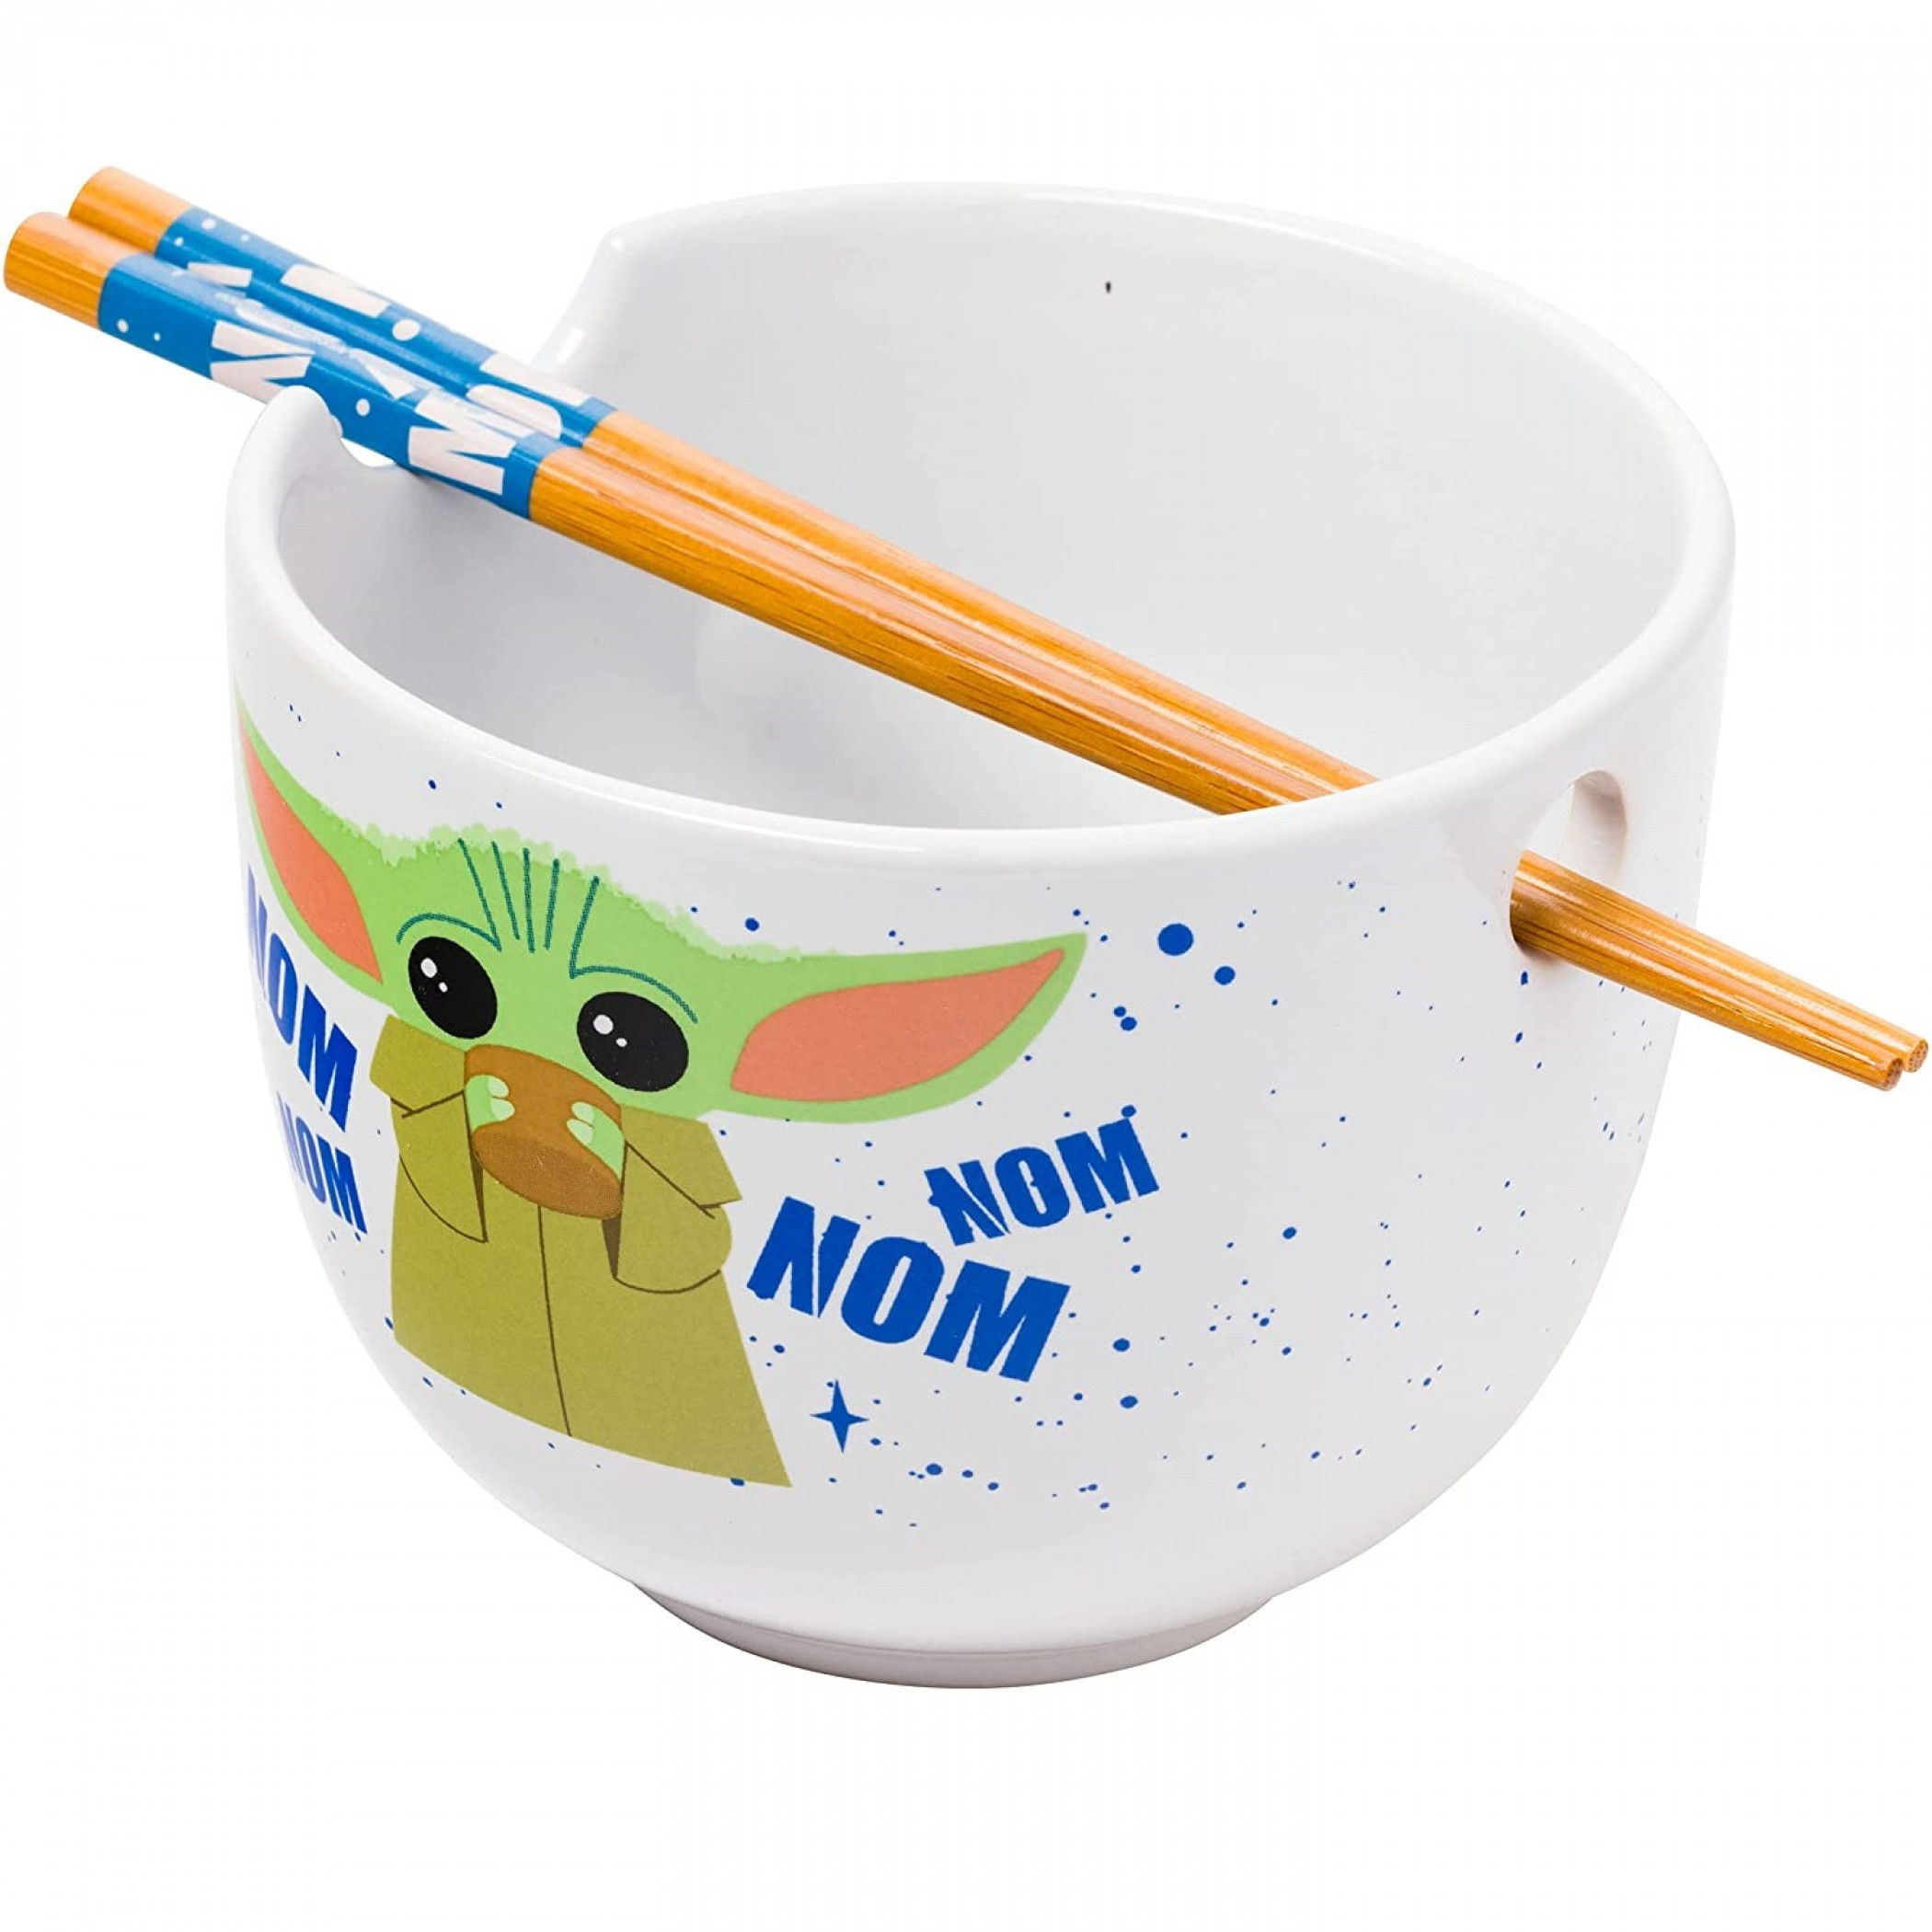 Star Wars The Mandalorian The Child Nom Nom Ramen Bowl with Chopsticks